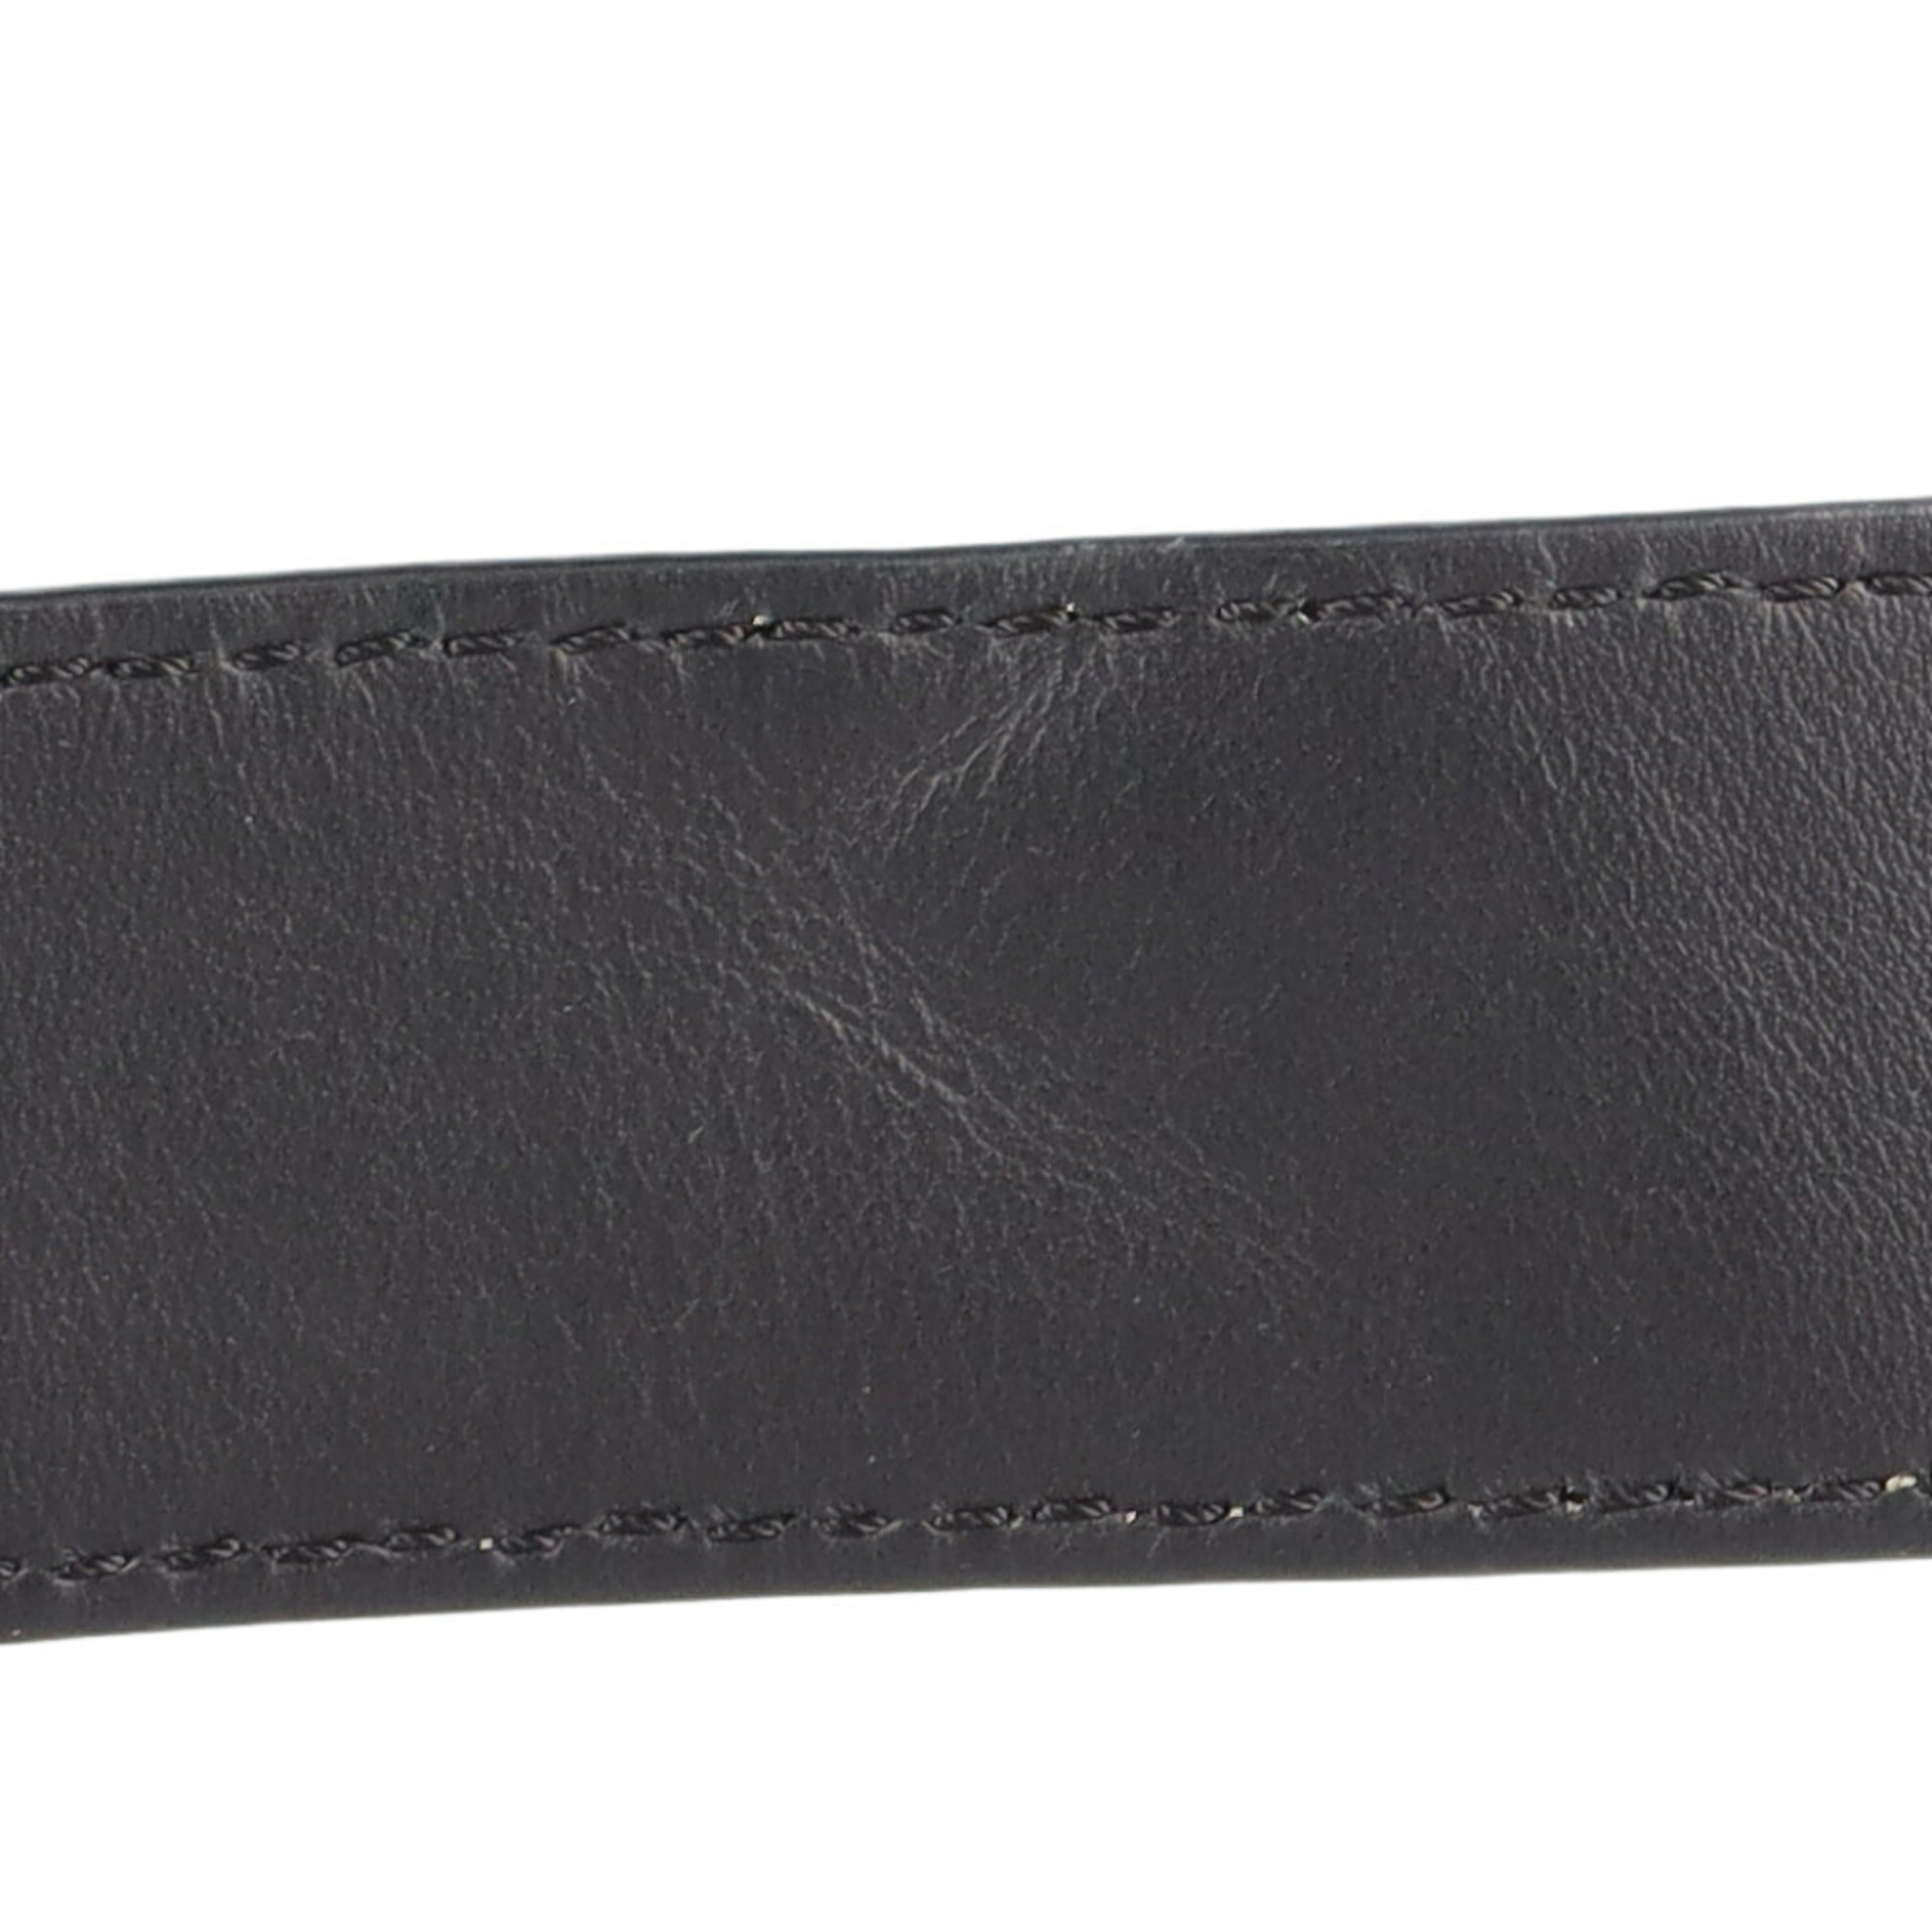 Fendi FENDI dot com handbag leather unisex